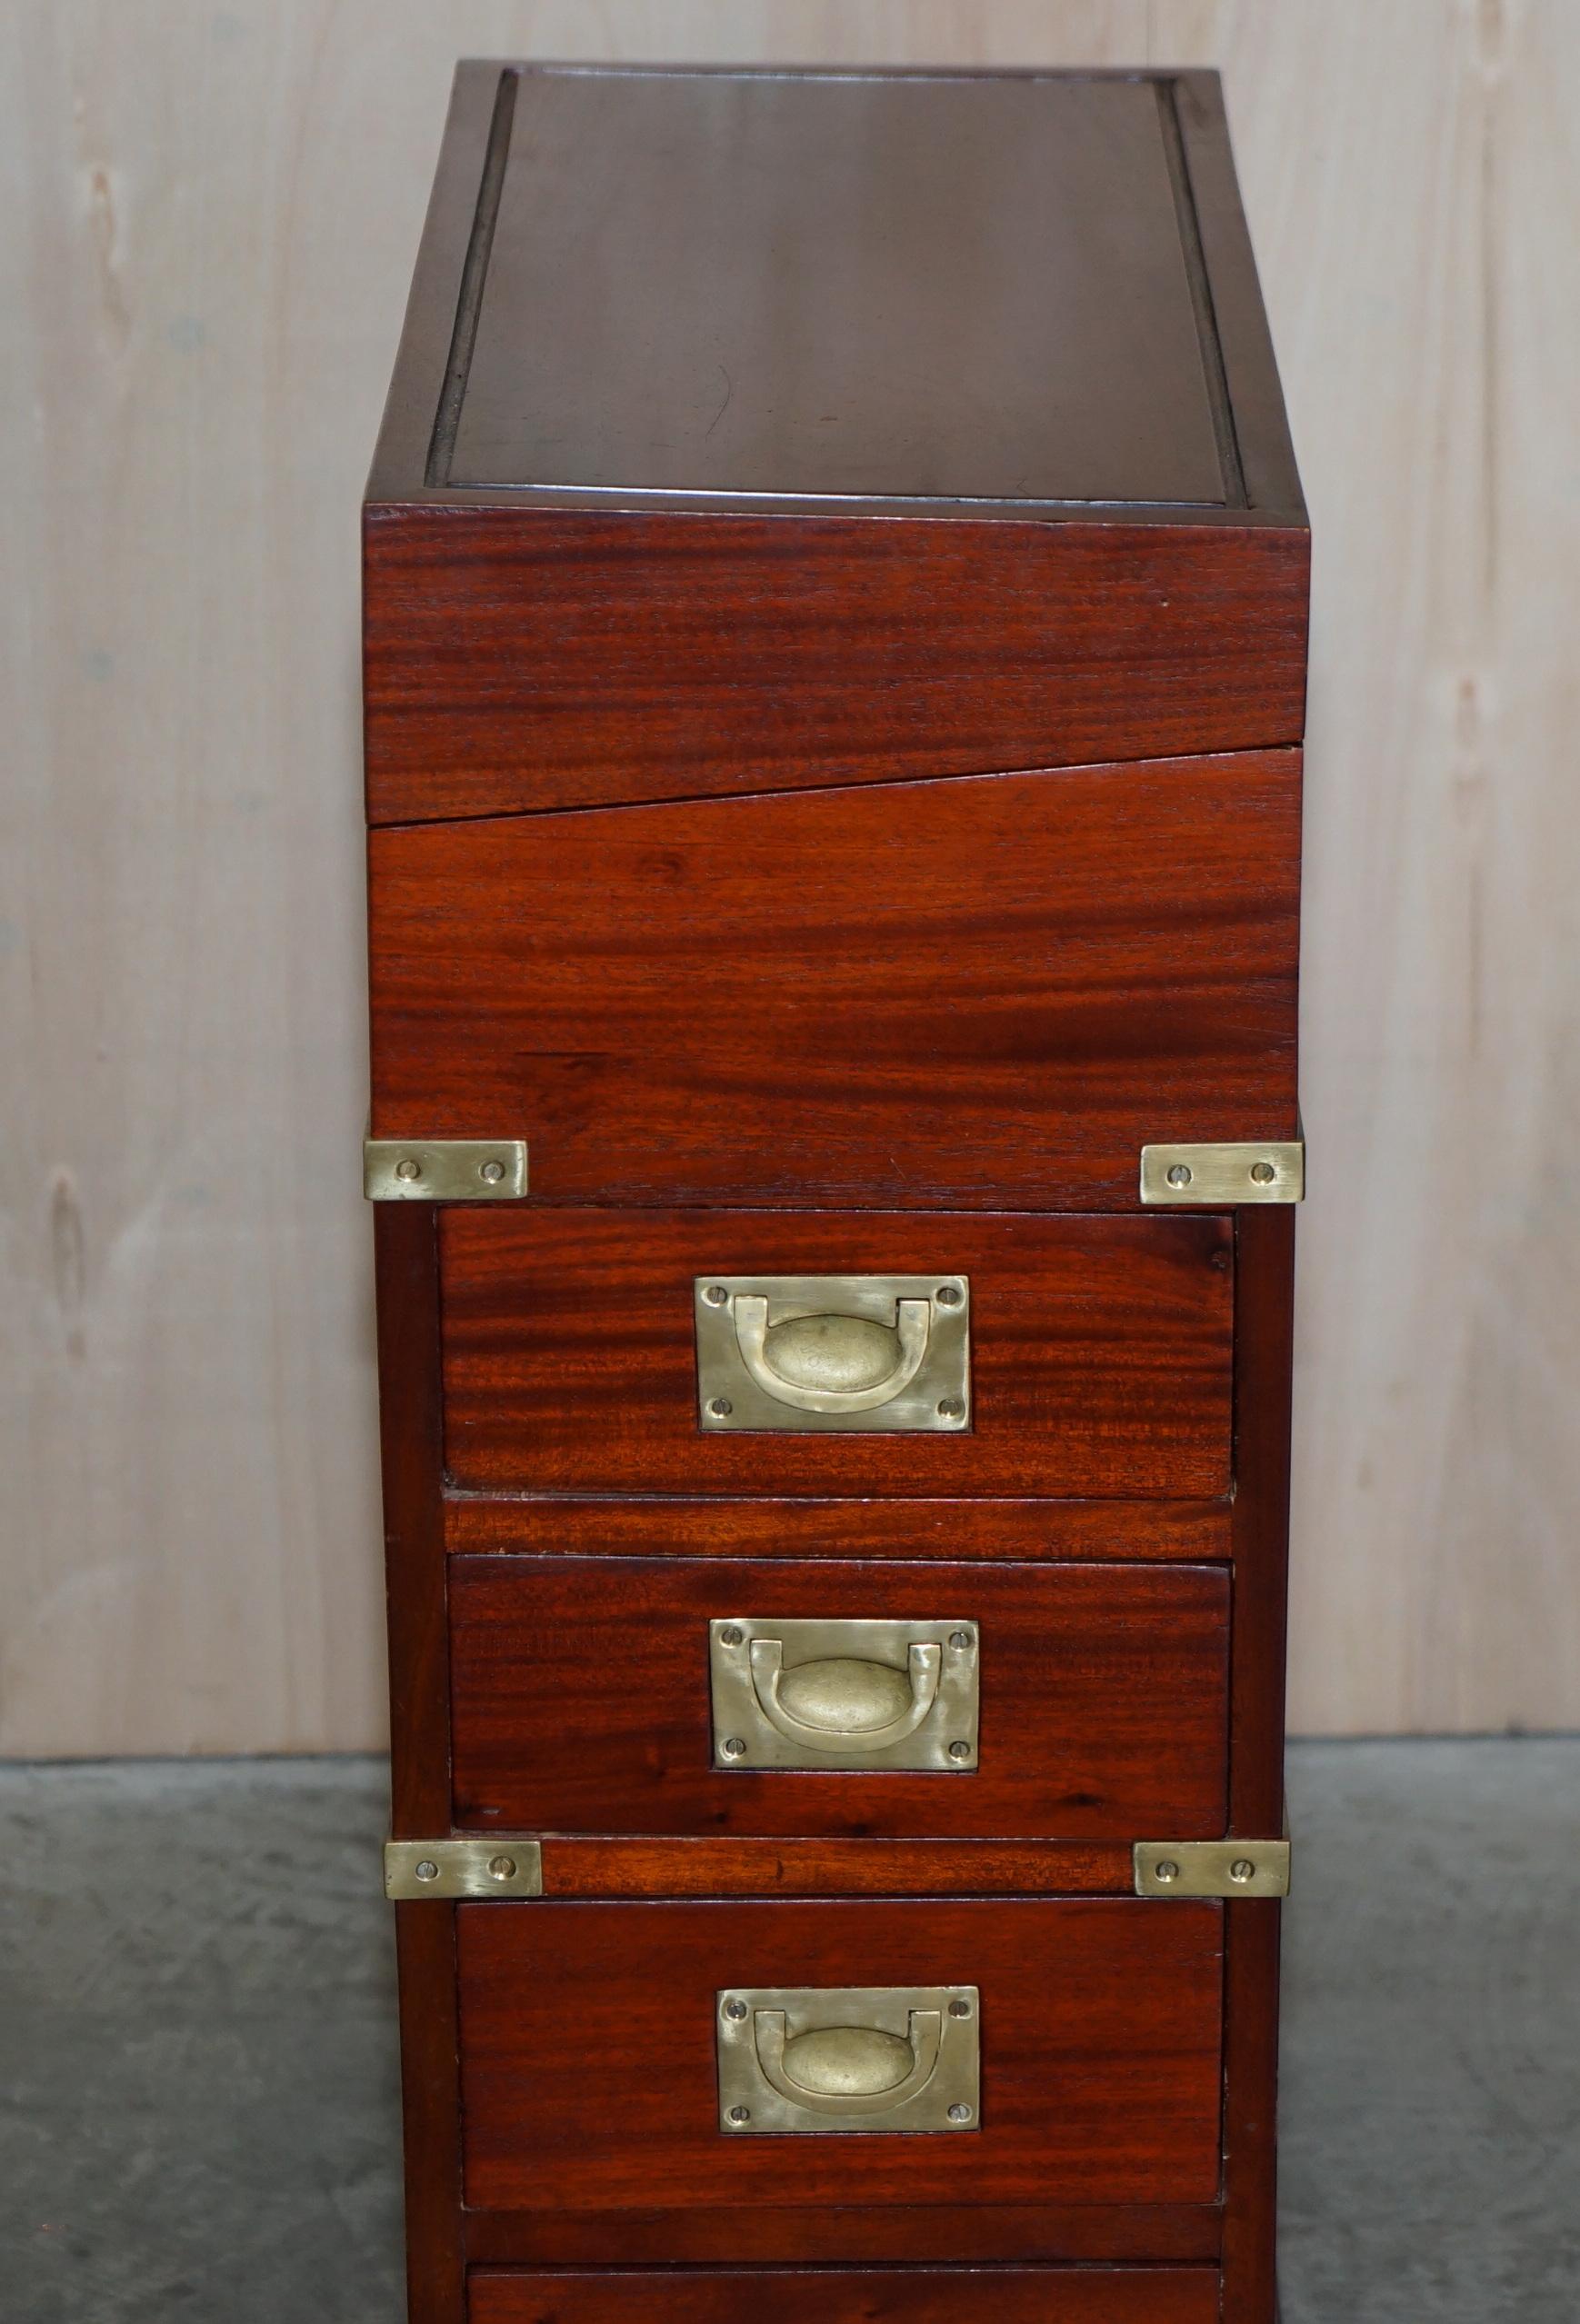 Campaign Vintage Harrods Kennedy Hardwood & Brass Small Davenport Pedestal Desk Table